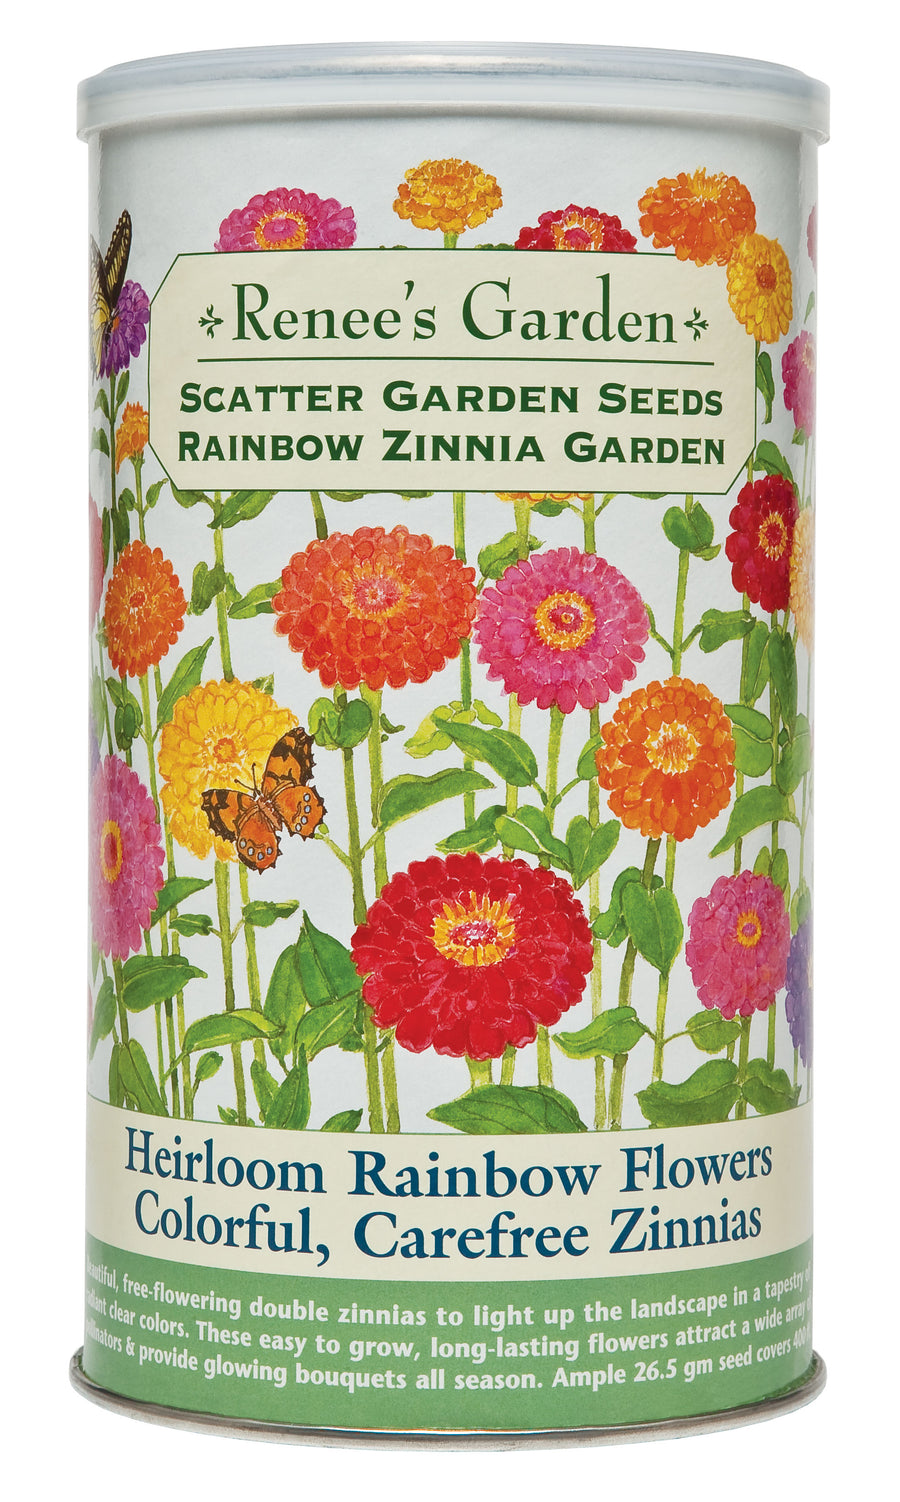 Scatter Garden Rainbow Zinnia Seeds